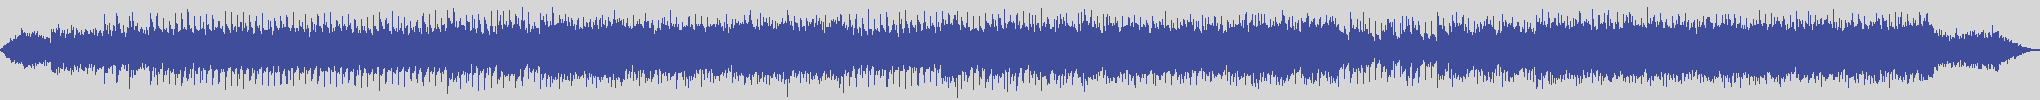 upr [UPRGOLD07] Larme Blanche - Nibiru [Original Mix] audio wave form